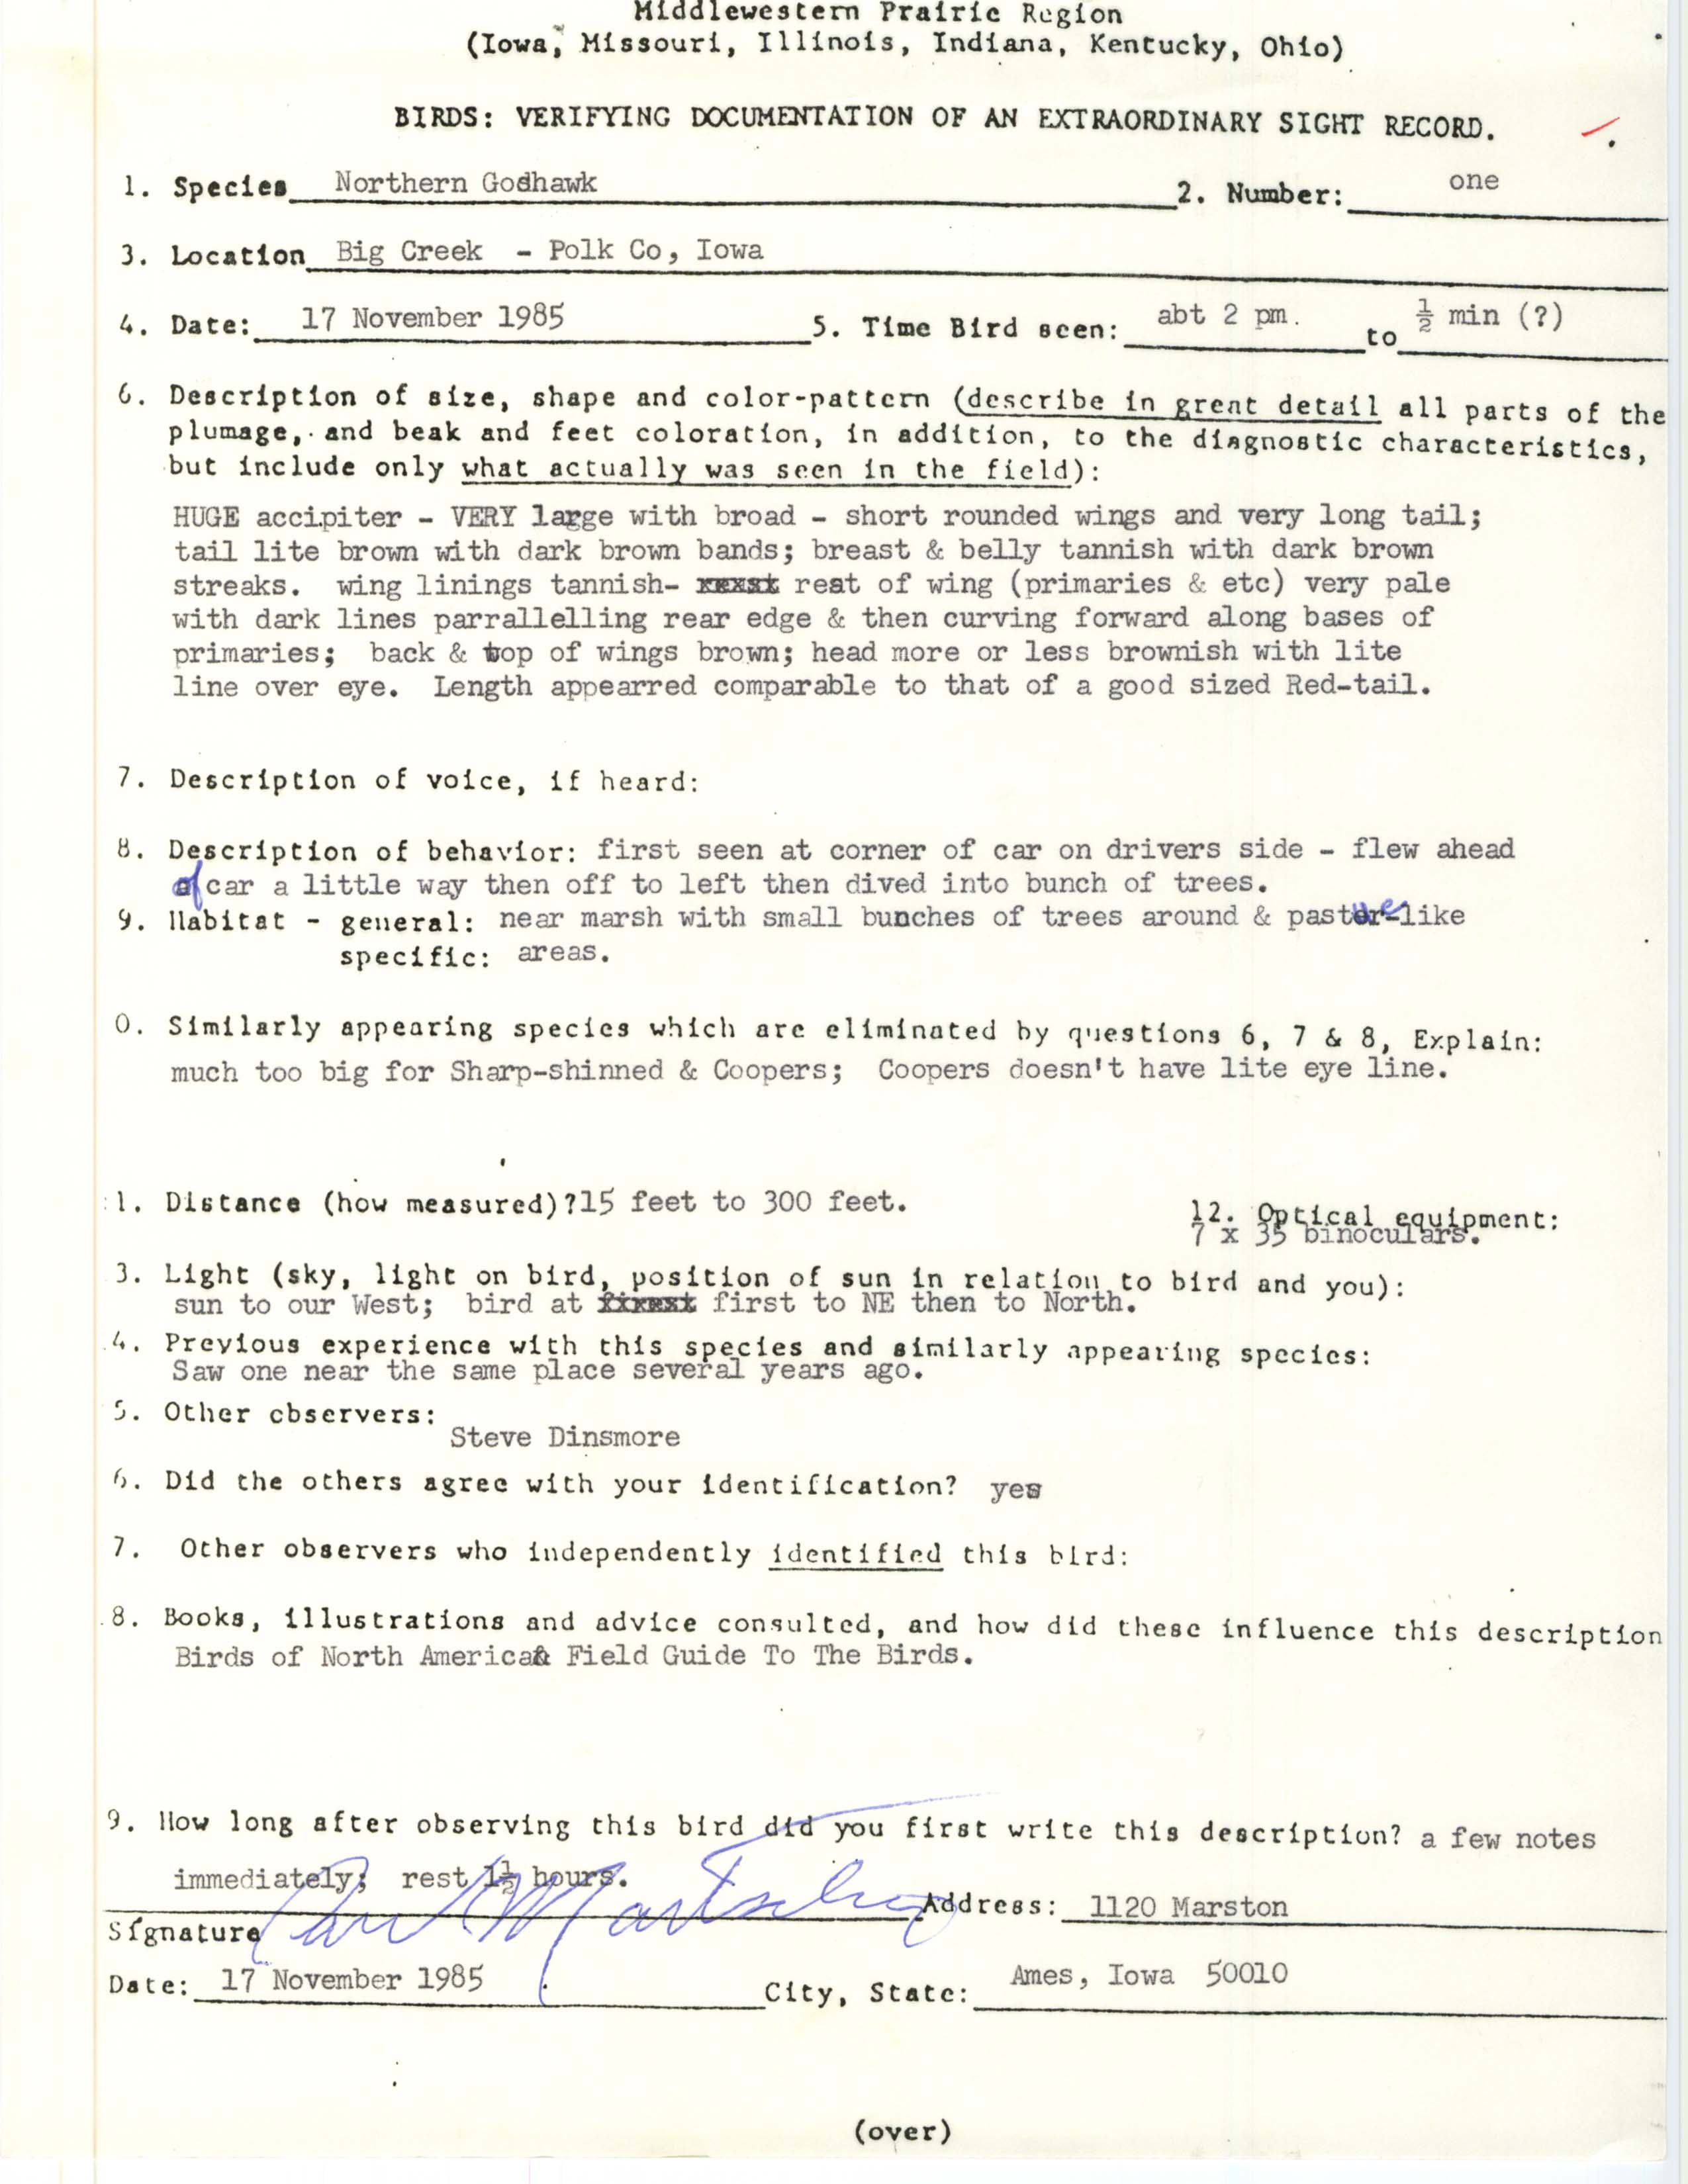 Rare bird documentation form for Northern Goshawk at Big Creek, 1985